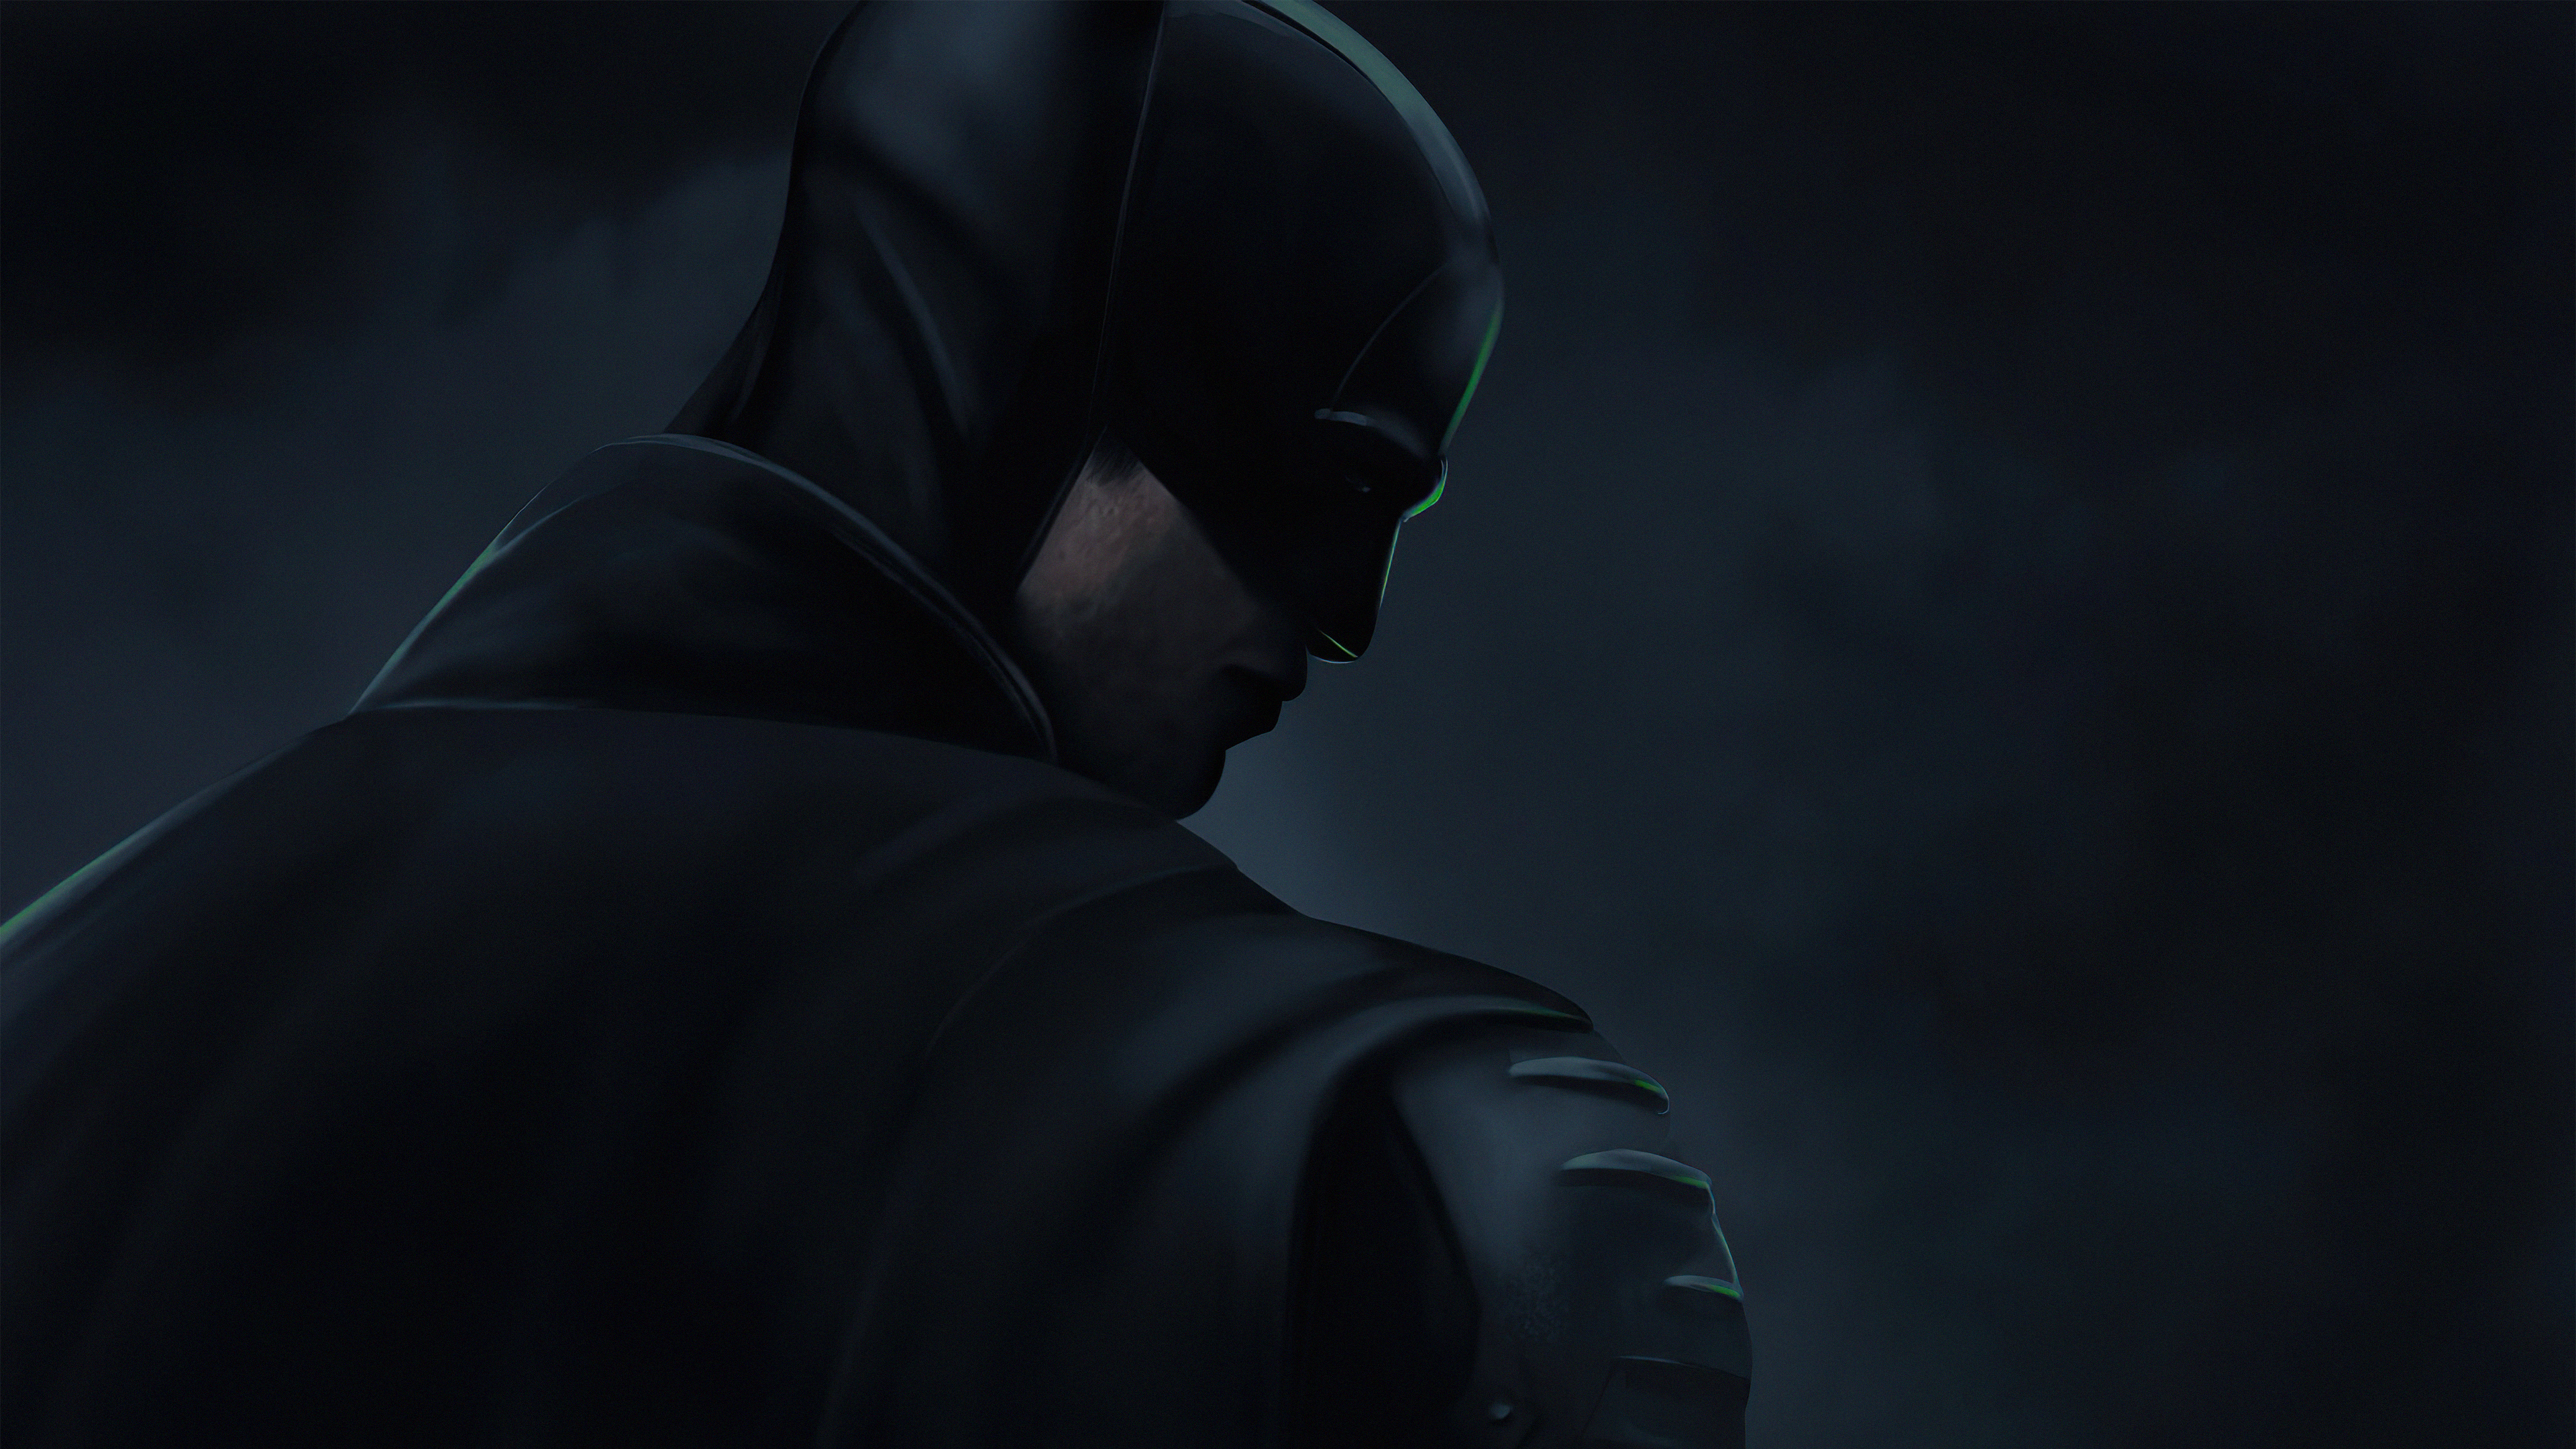 The Batman 2022 Macbook Pro Retina HD 4k Wallpaper, Image, Background, Photo and Picture